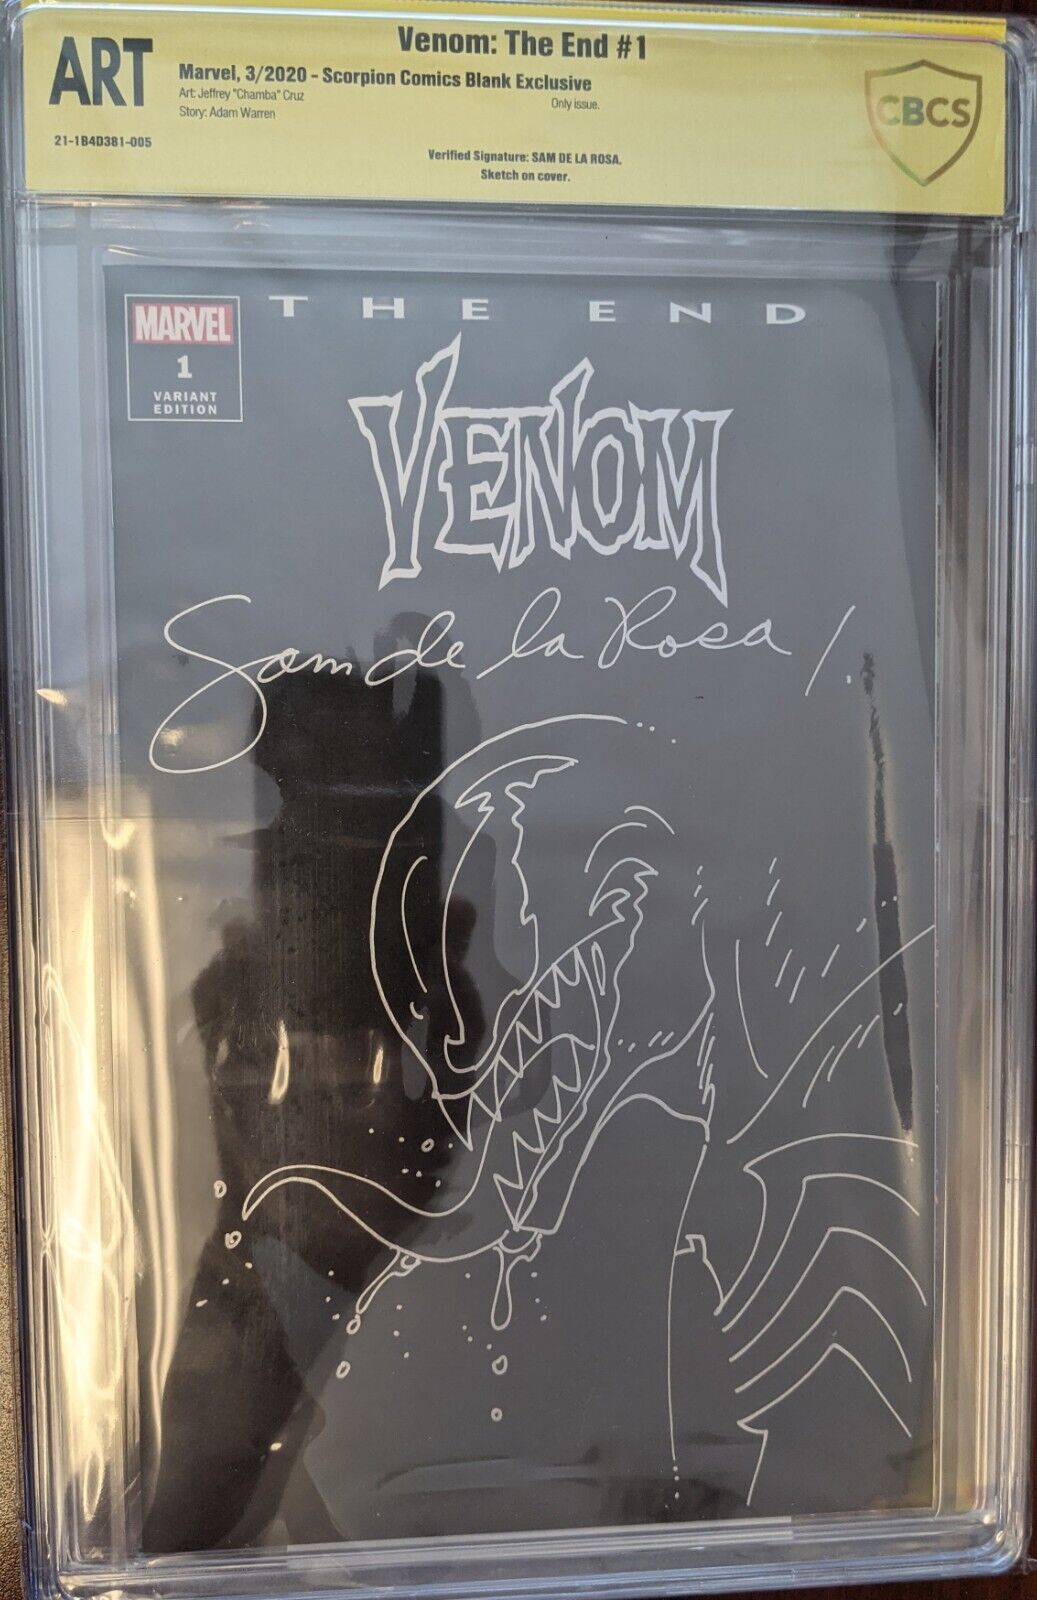 Venom The End #1 (Signed & Sketch by Sam De La Rosa) CBCS ART Grade